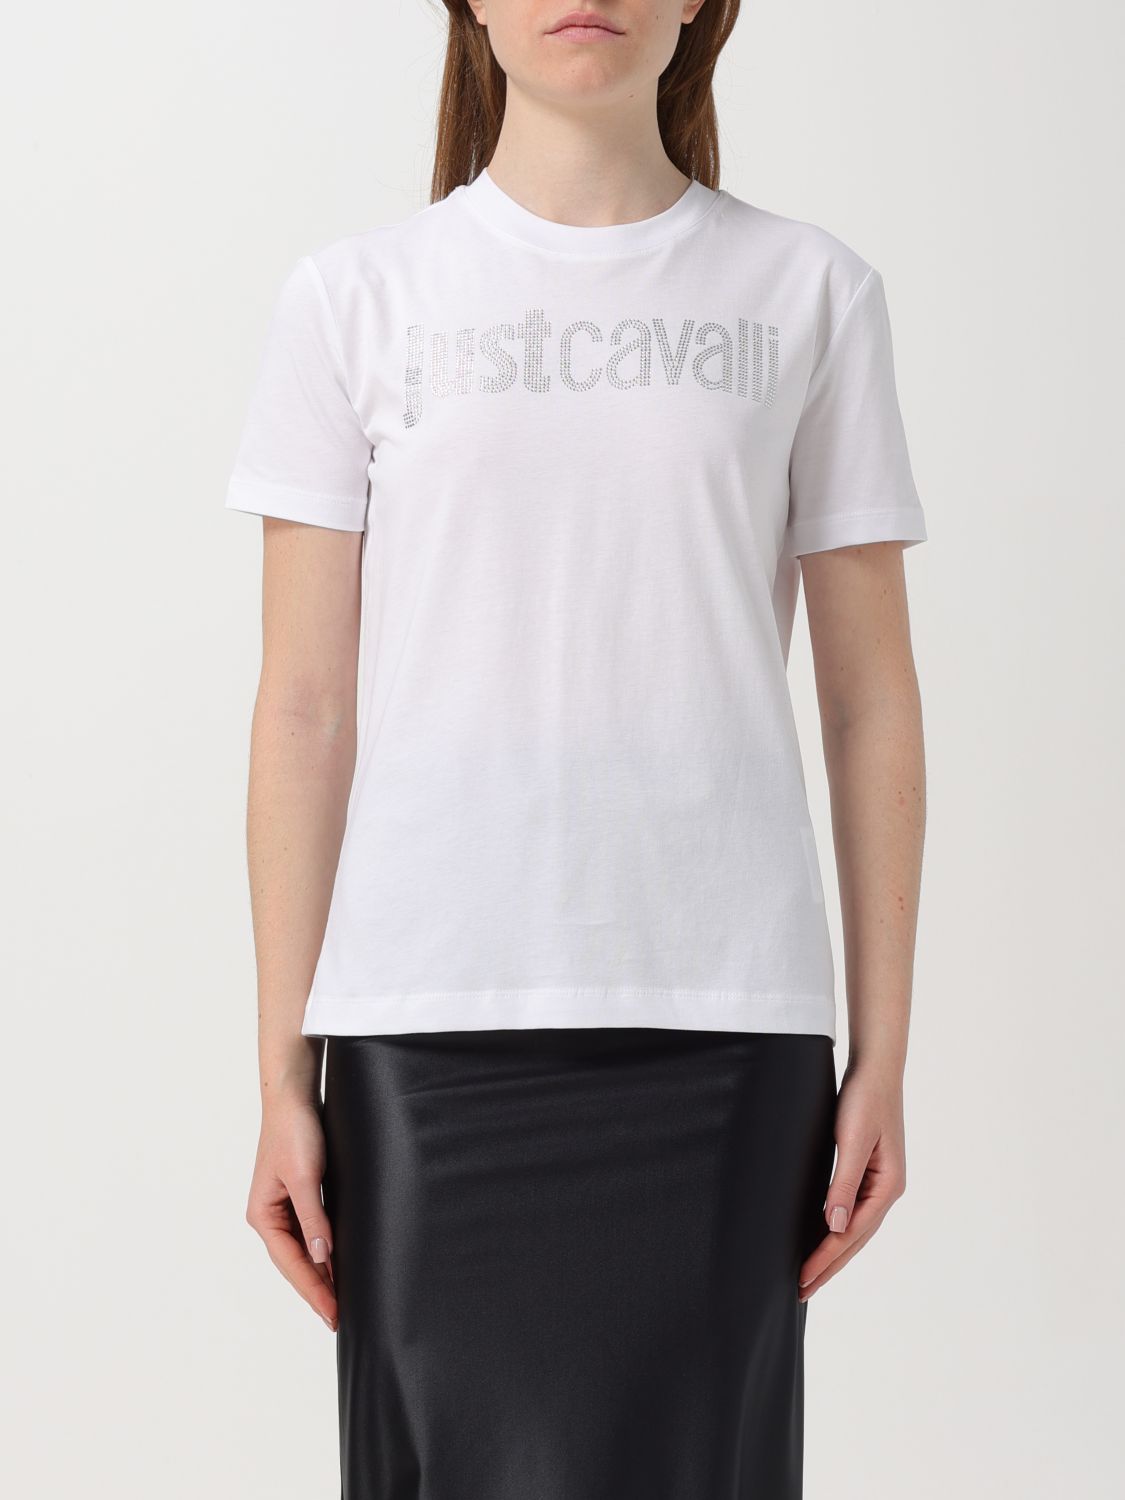 Just Cavalli T-Shirt JUST CAVALLI Woman colour White